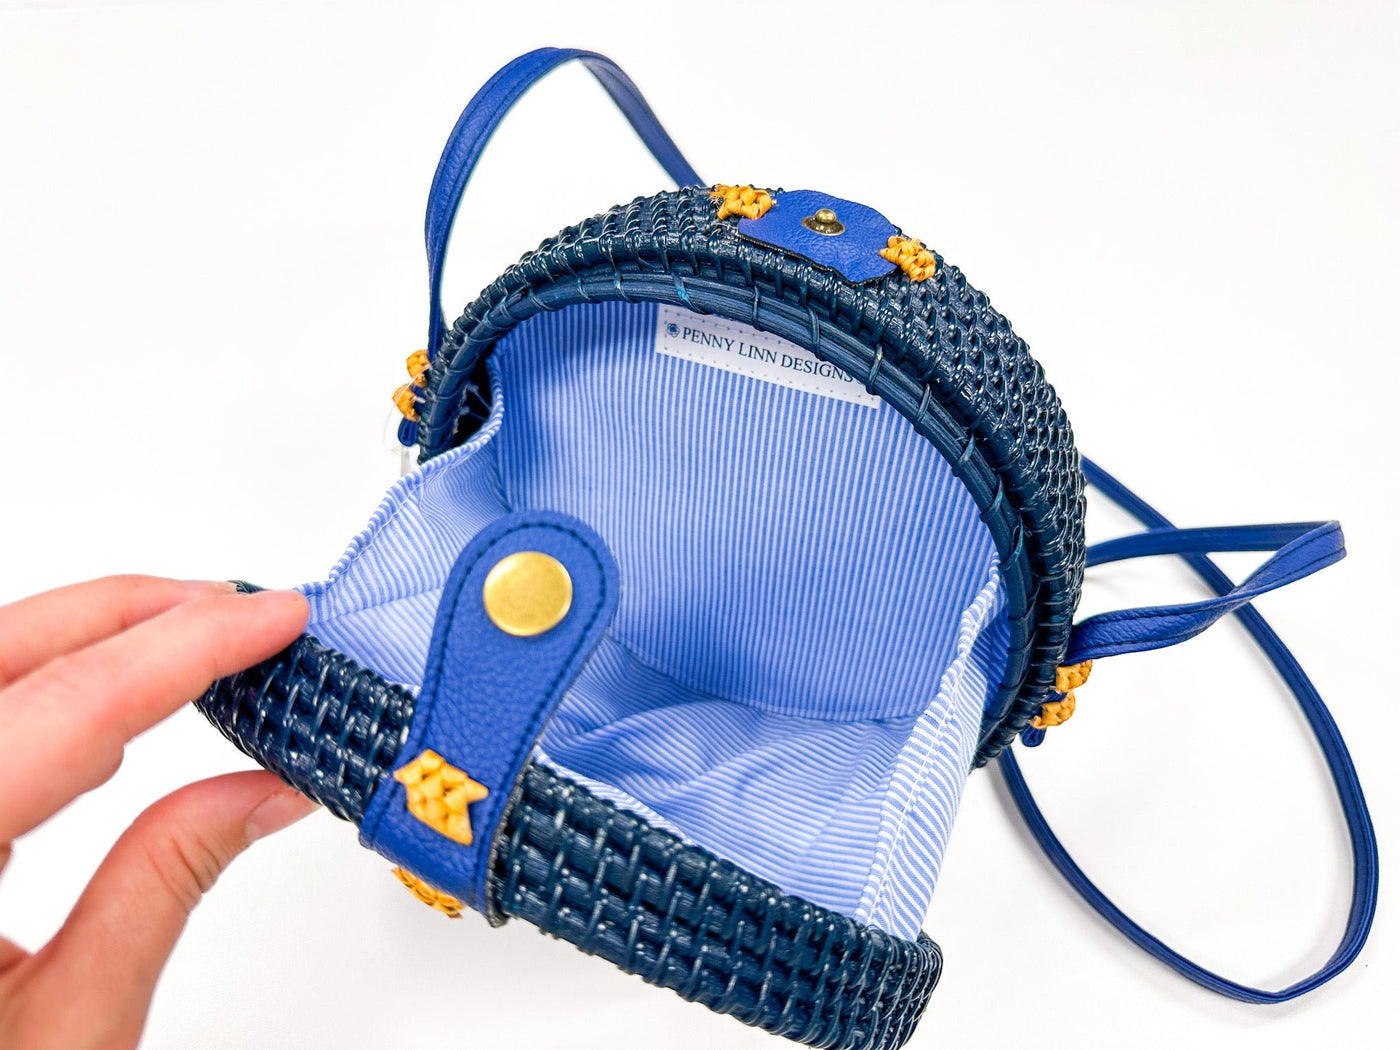 4x4 Round Wicker Bag - Penny Linn Designs - Penny Linn Designs